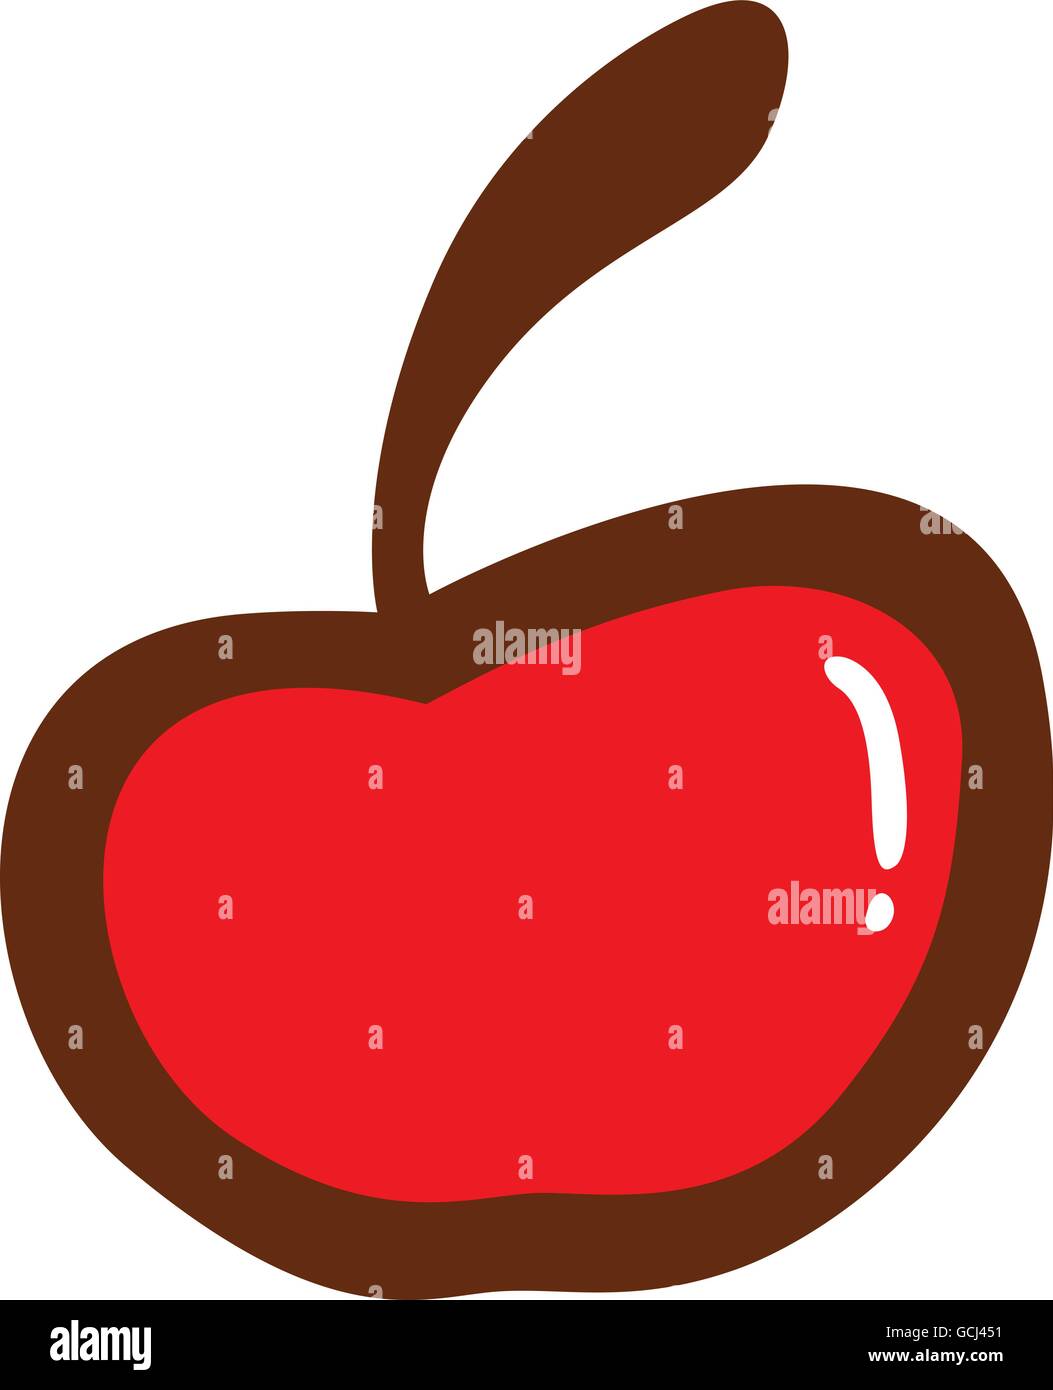 Kirschfrucht-Vektor-Illustration Stock Vektor